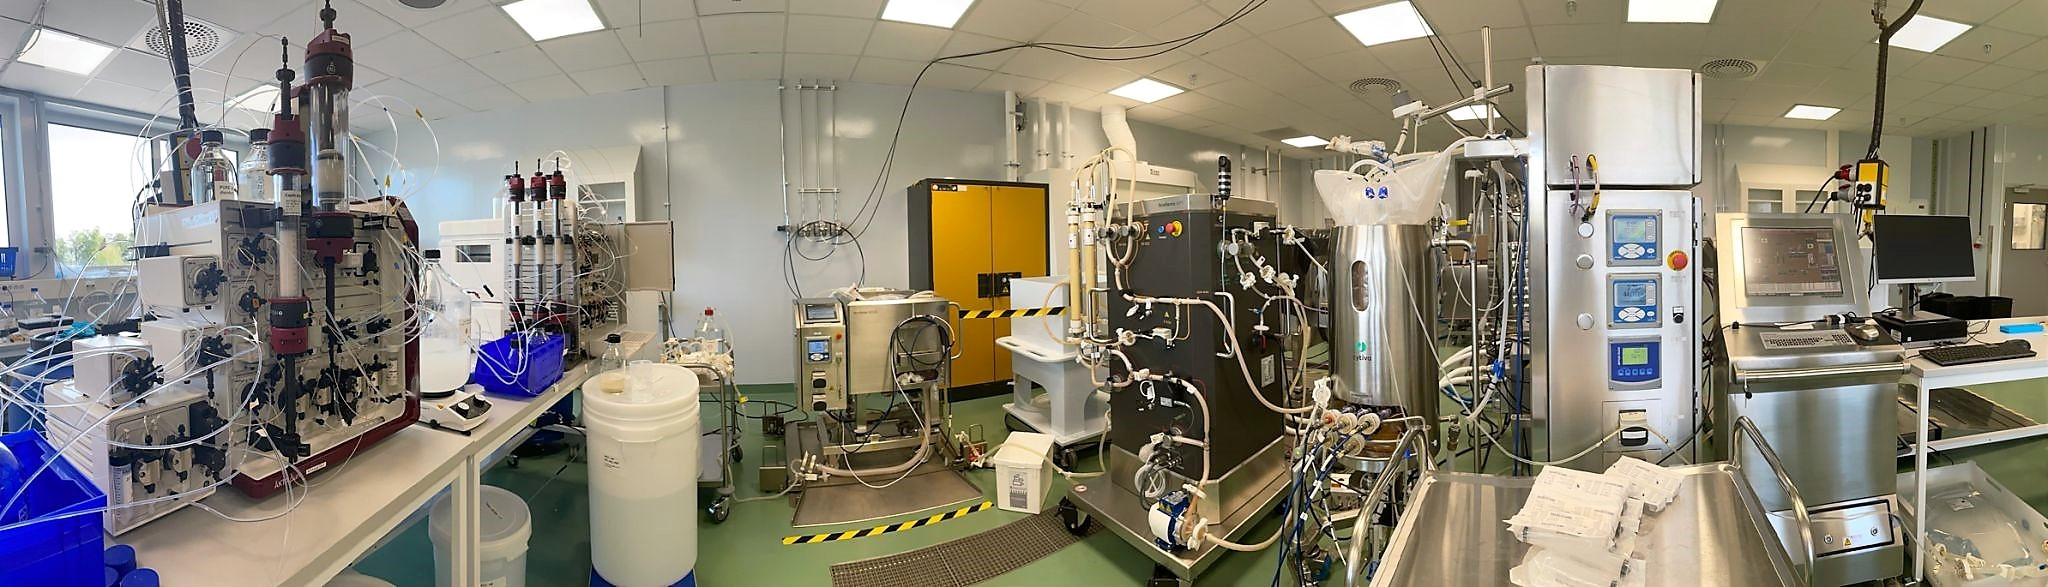 State of the art bioprocess lab equipment at Testa Center in Uppsala